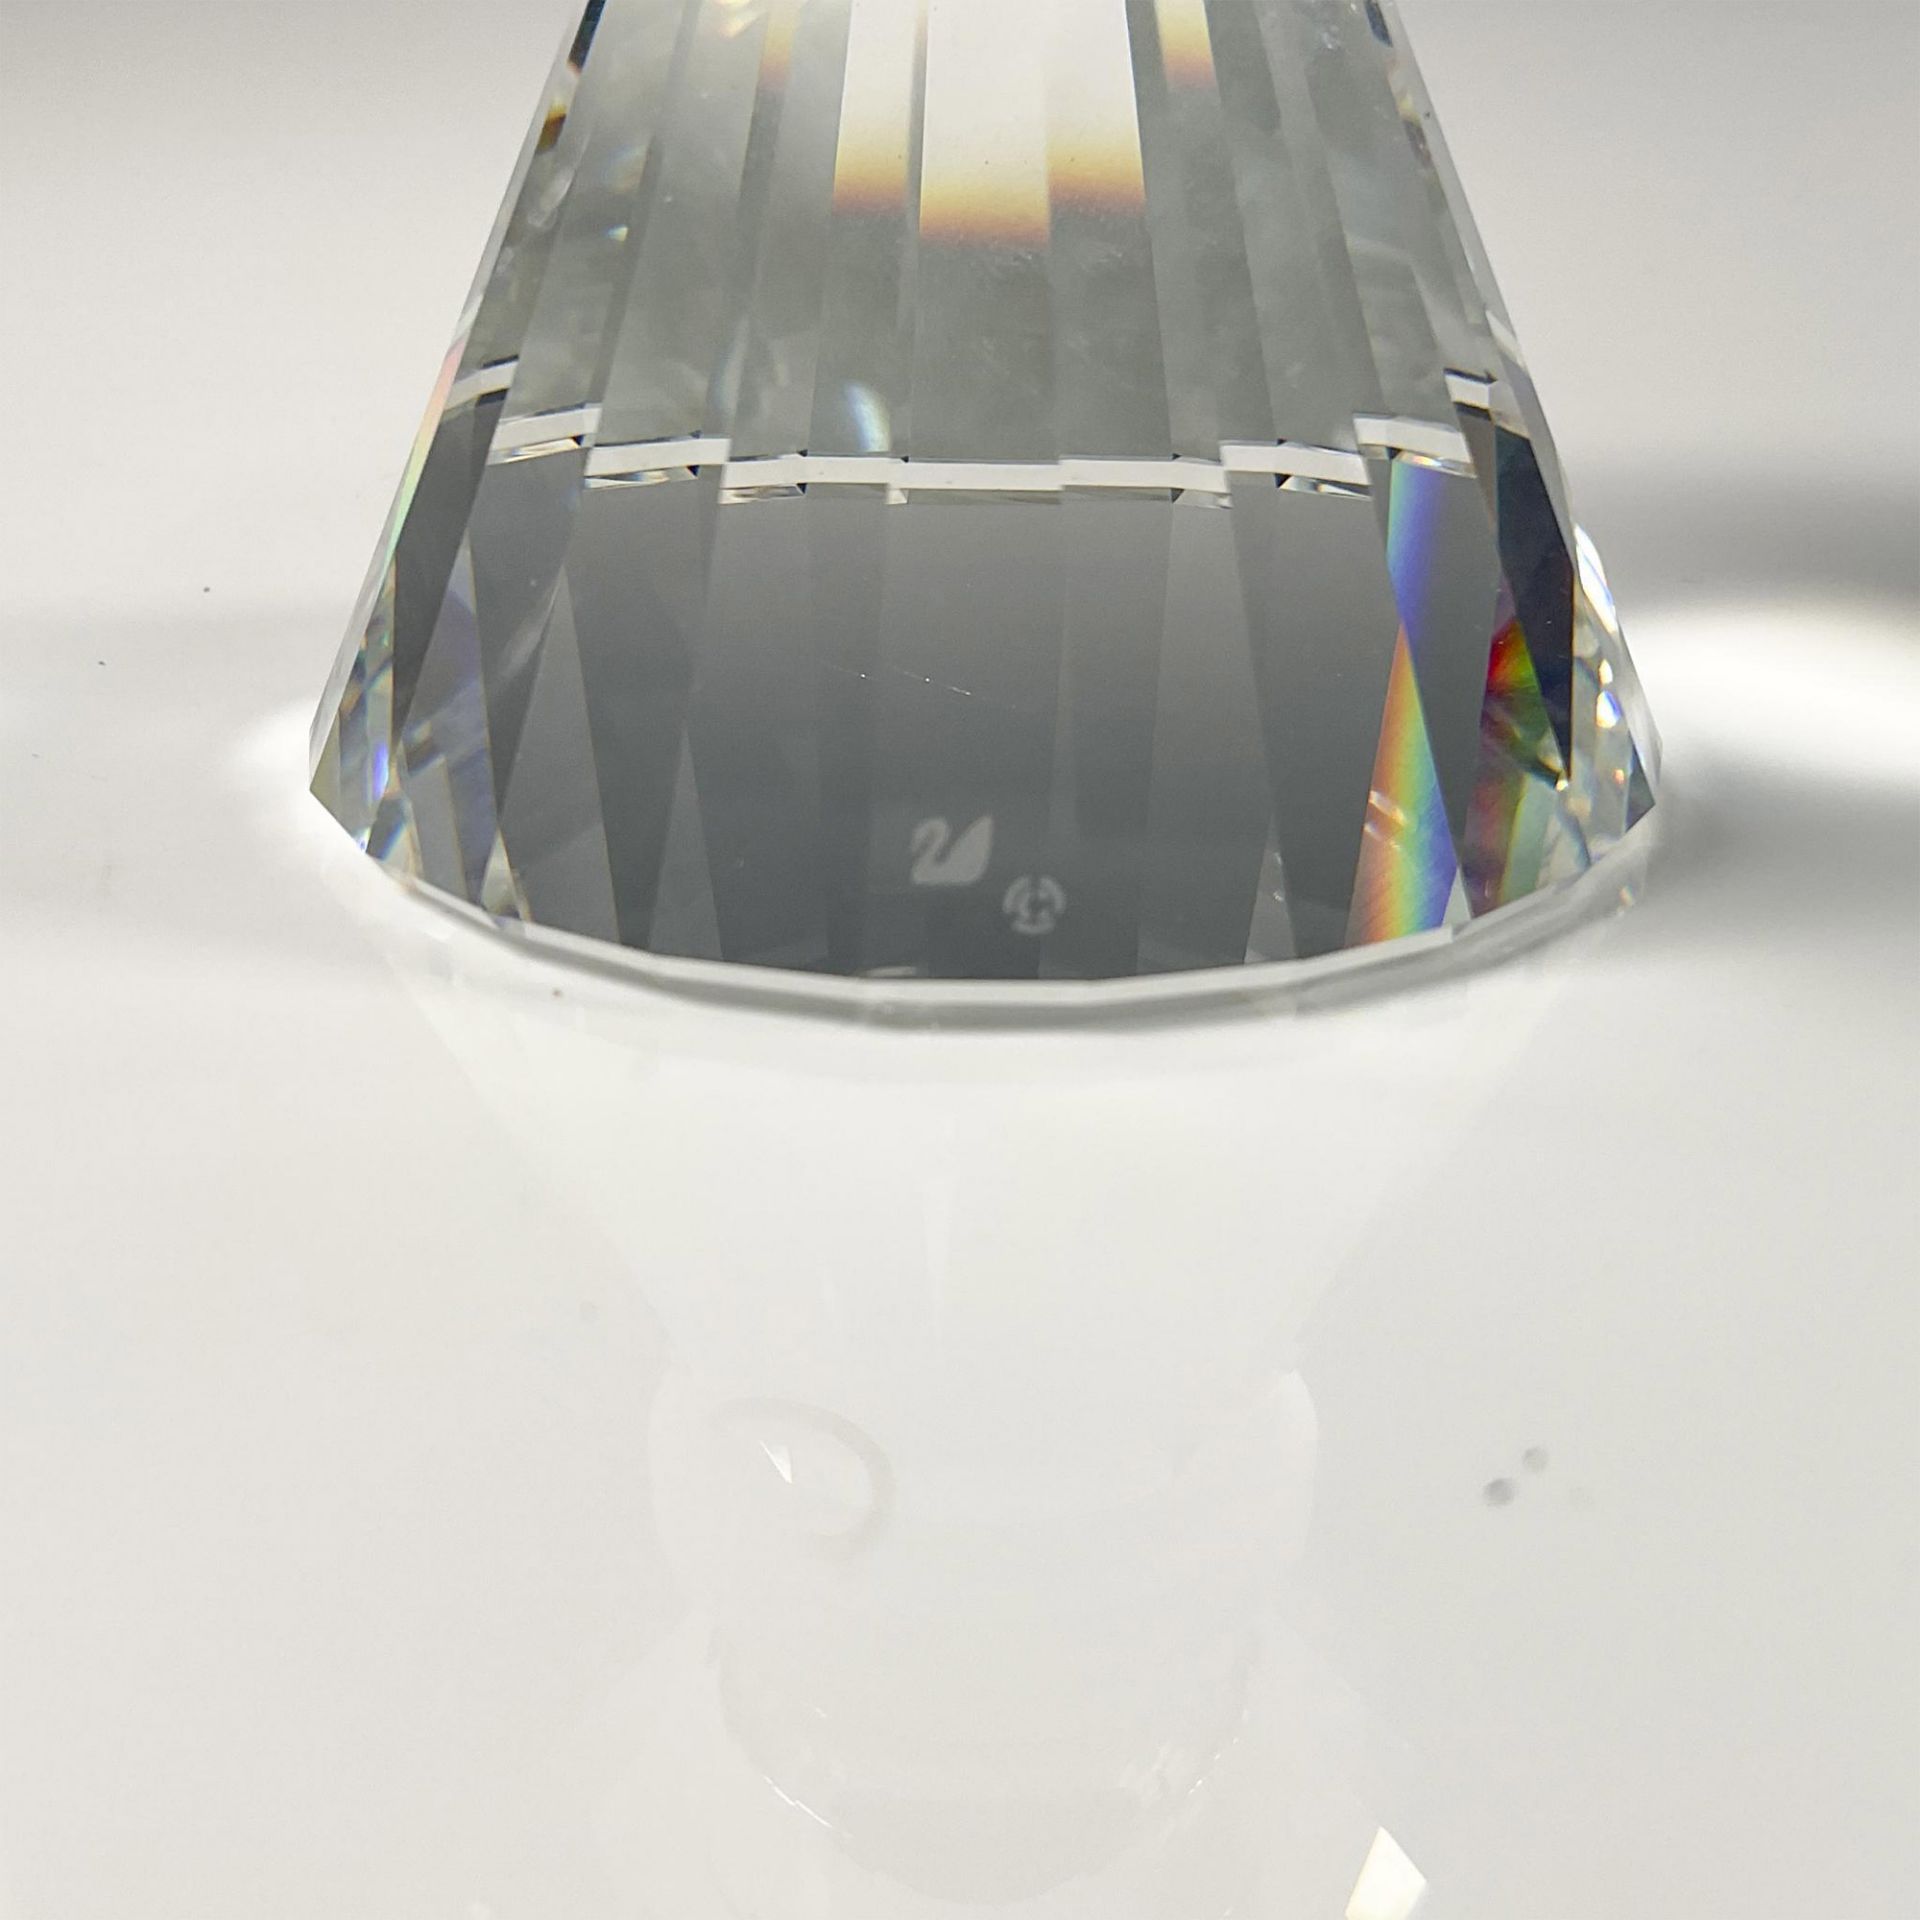 Swarovski Lead Crystal Candleholder - Image 3 of 4